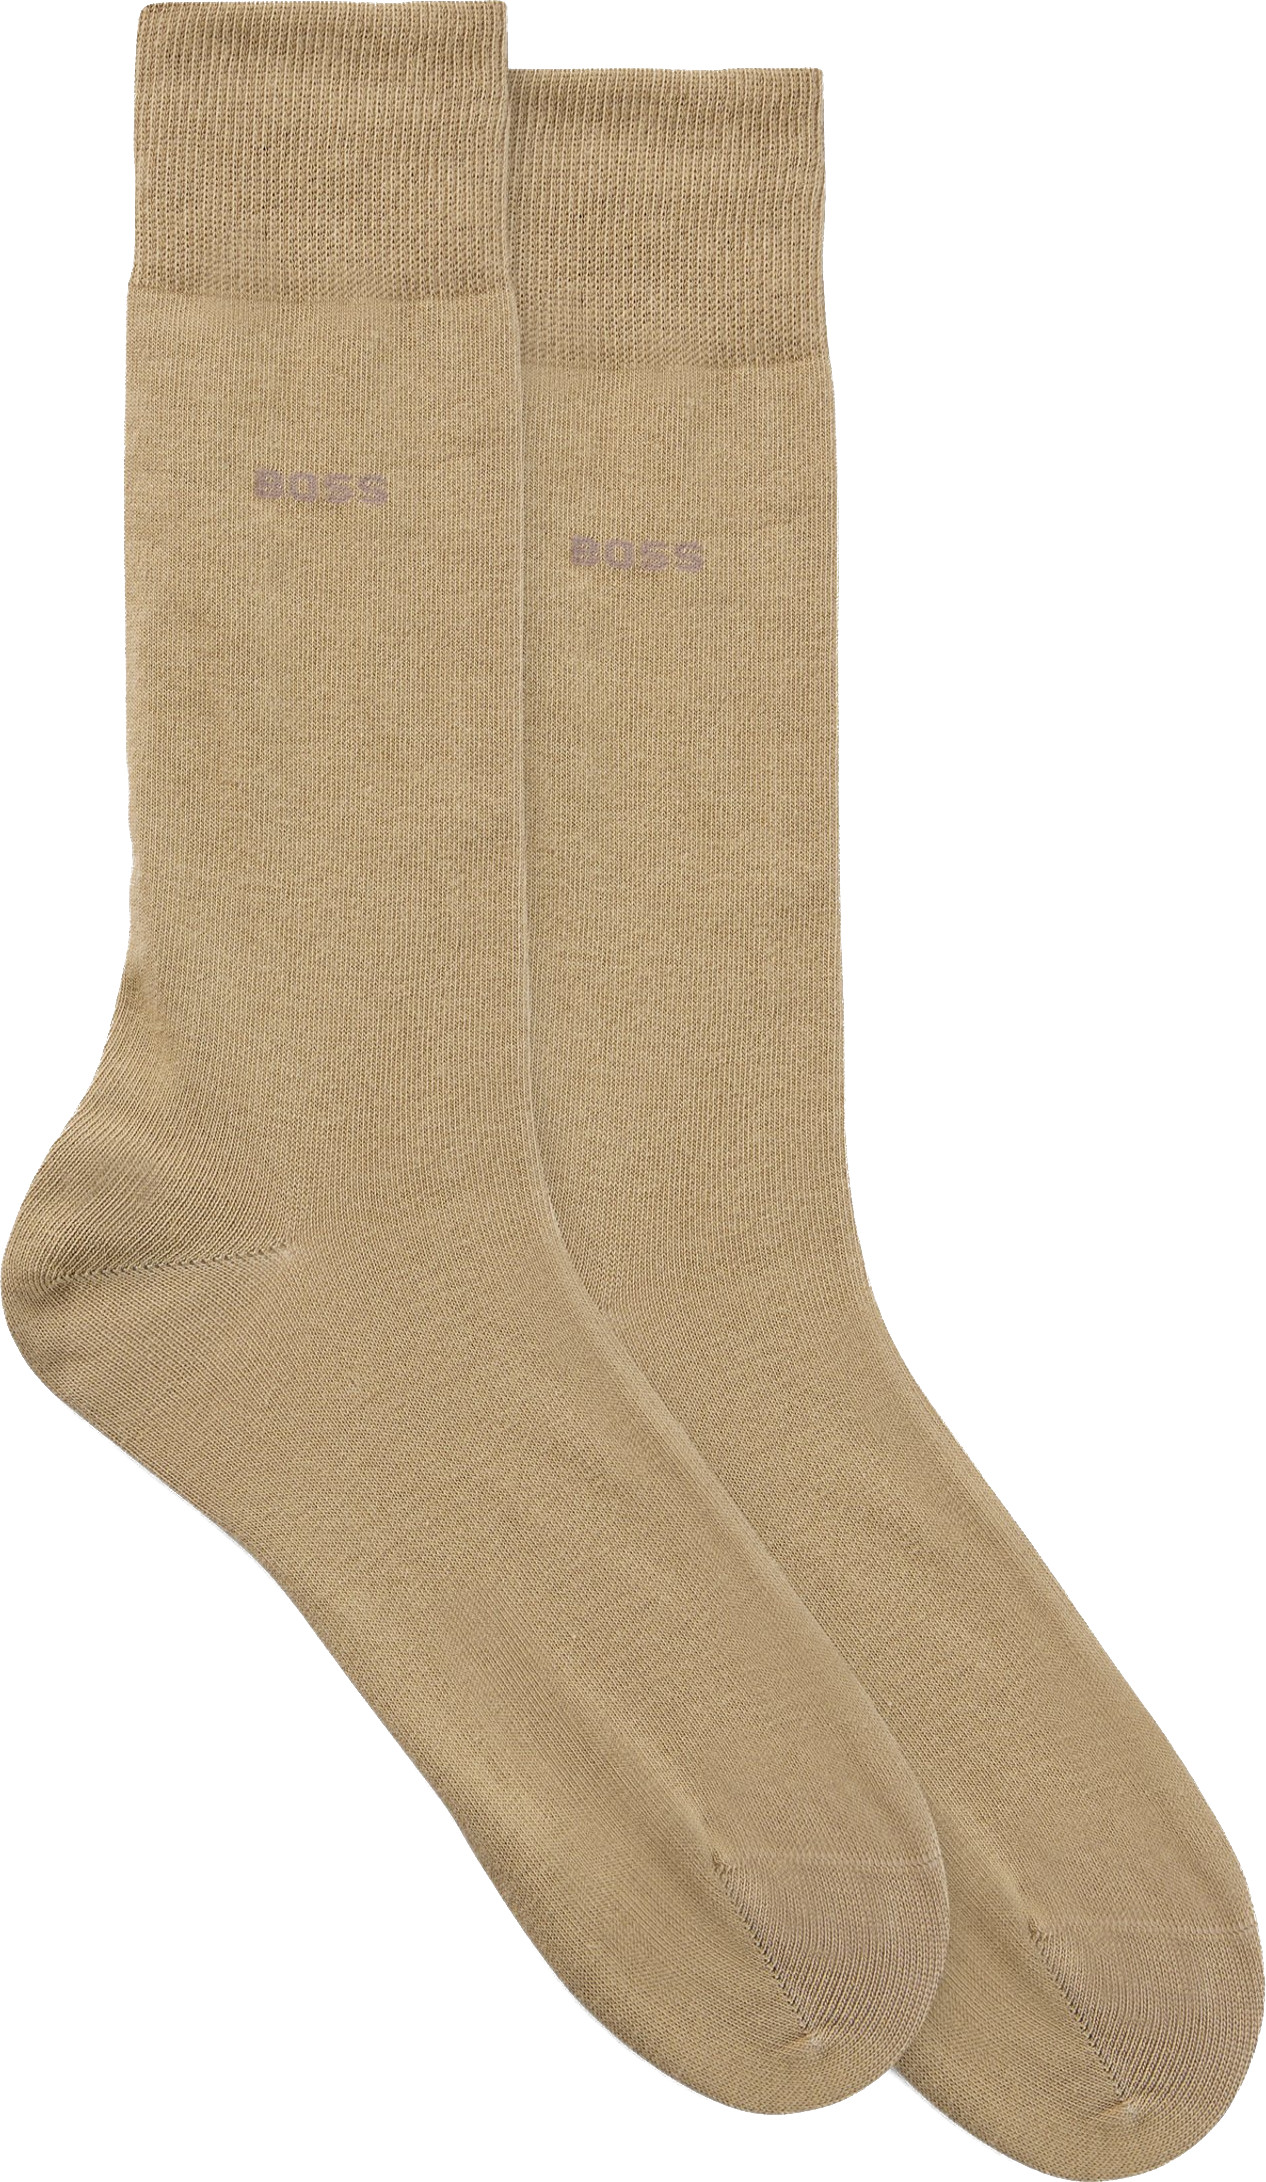 Hugo Boss 2 PACK - pánske ponožky BOSS 50516616-261 43-46